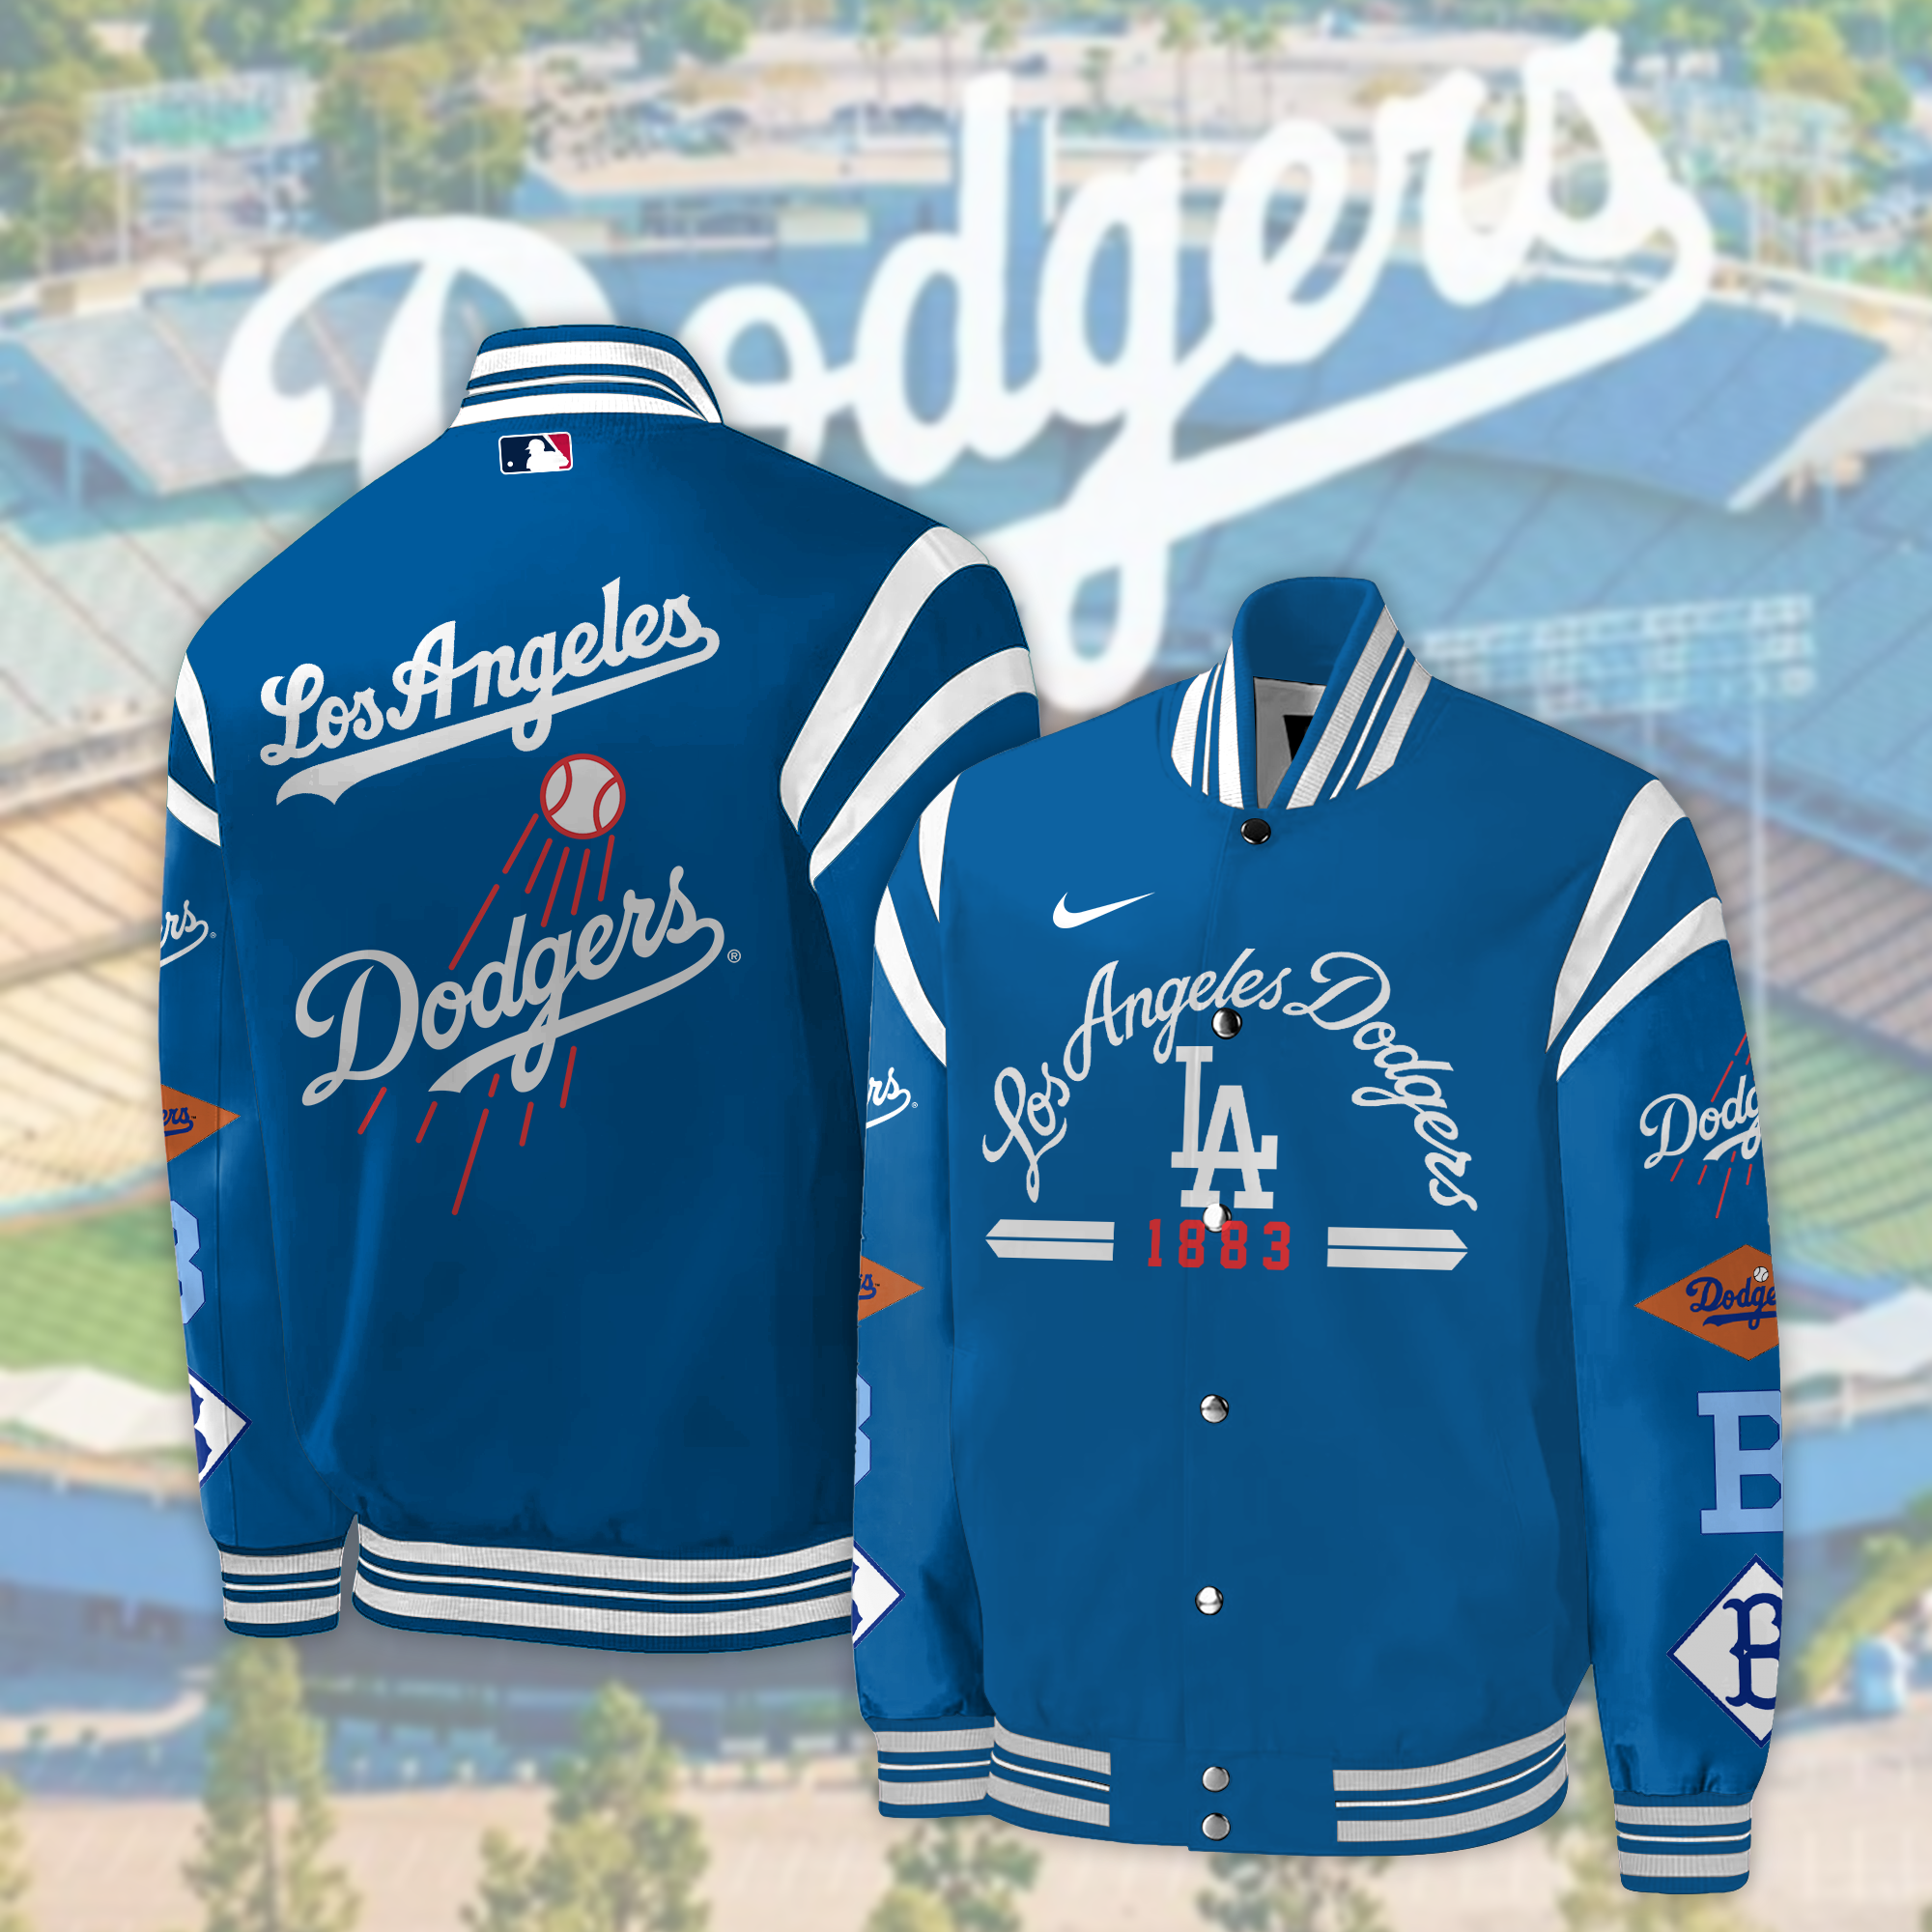 _ _ _Los Angeles Dodgers Bomber Jacket - BTF Store